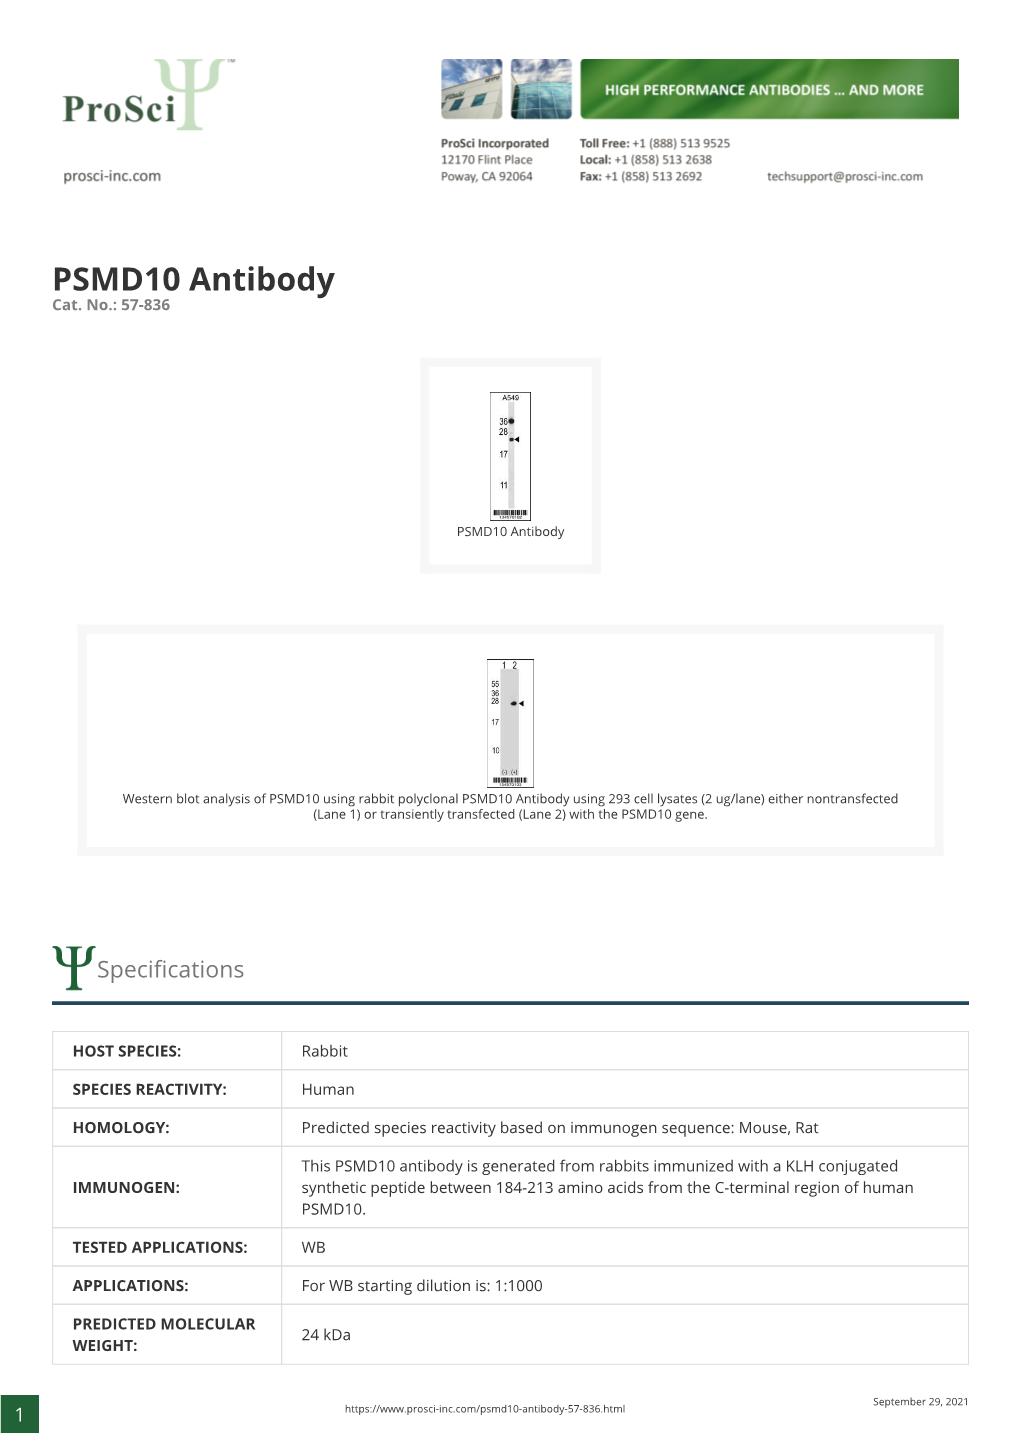 PSMD10 Antibody Cat